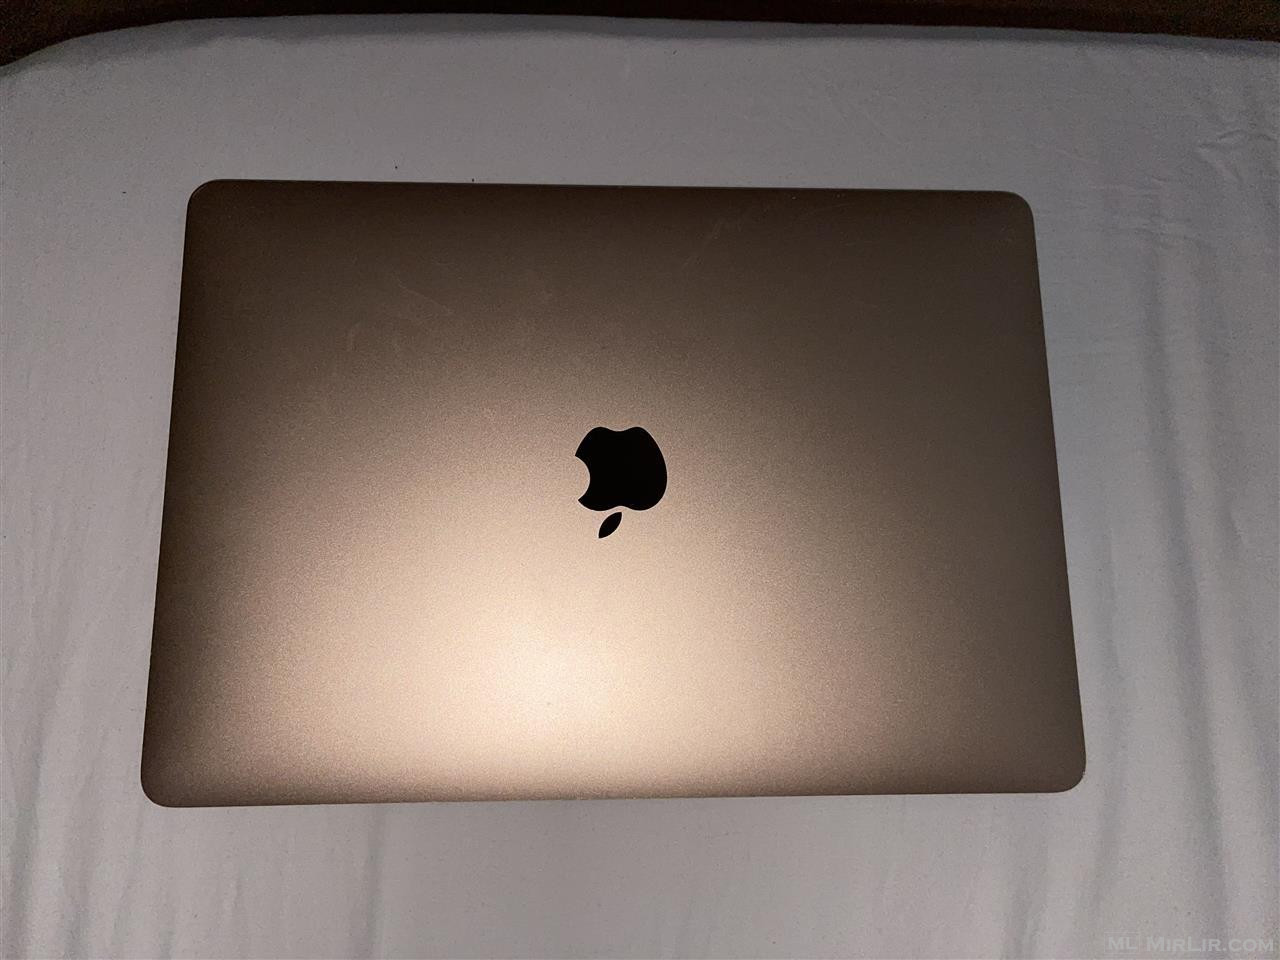 Apple MacBook Air (Retina, 13-inch, 2019) Rose Gold, 8GB RAM